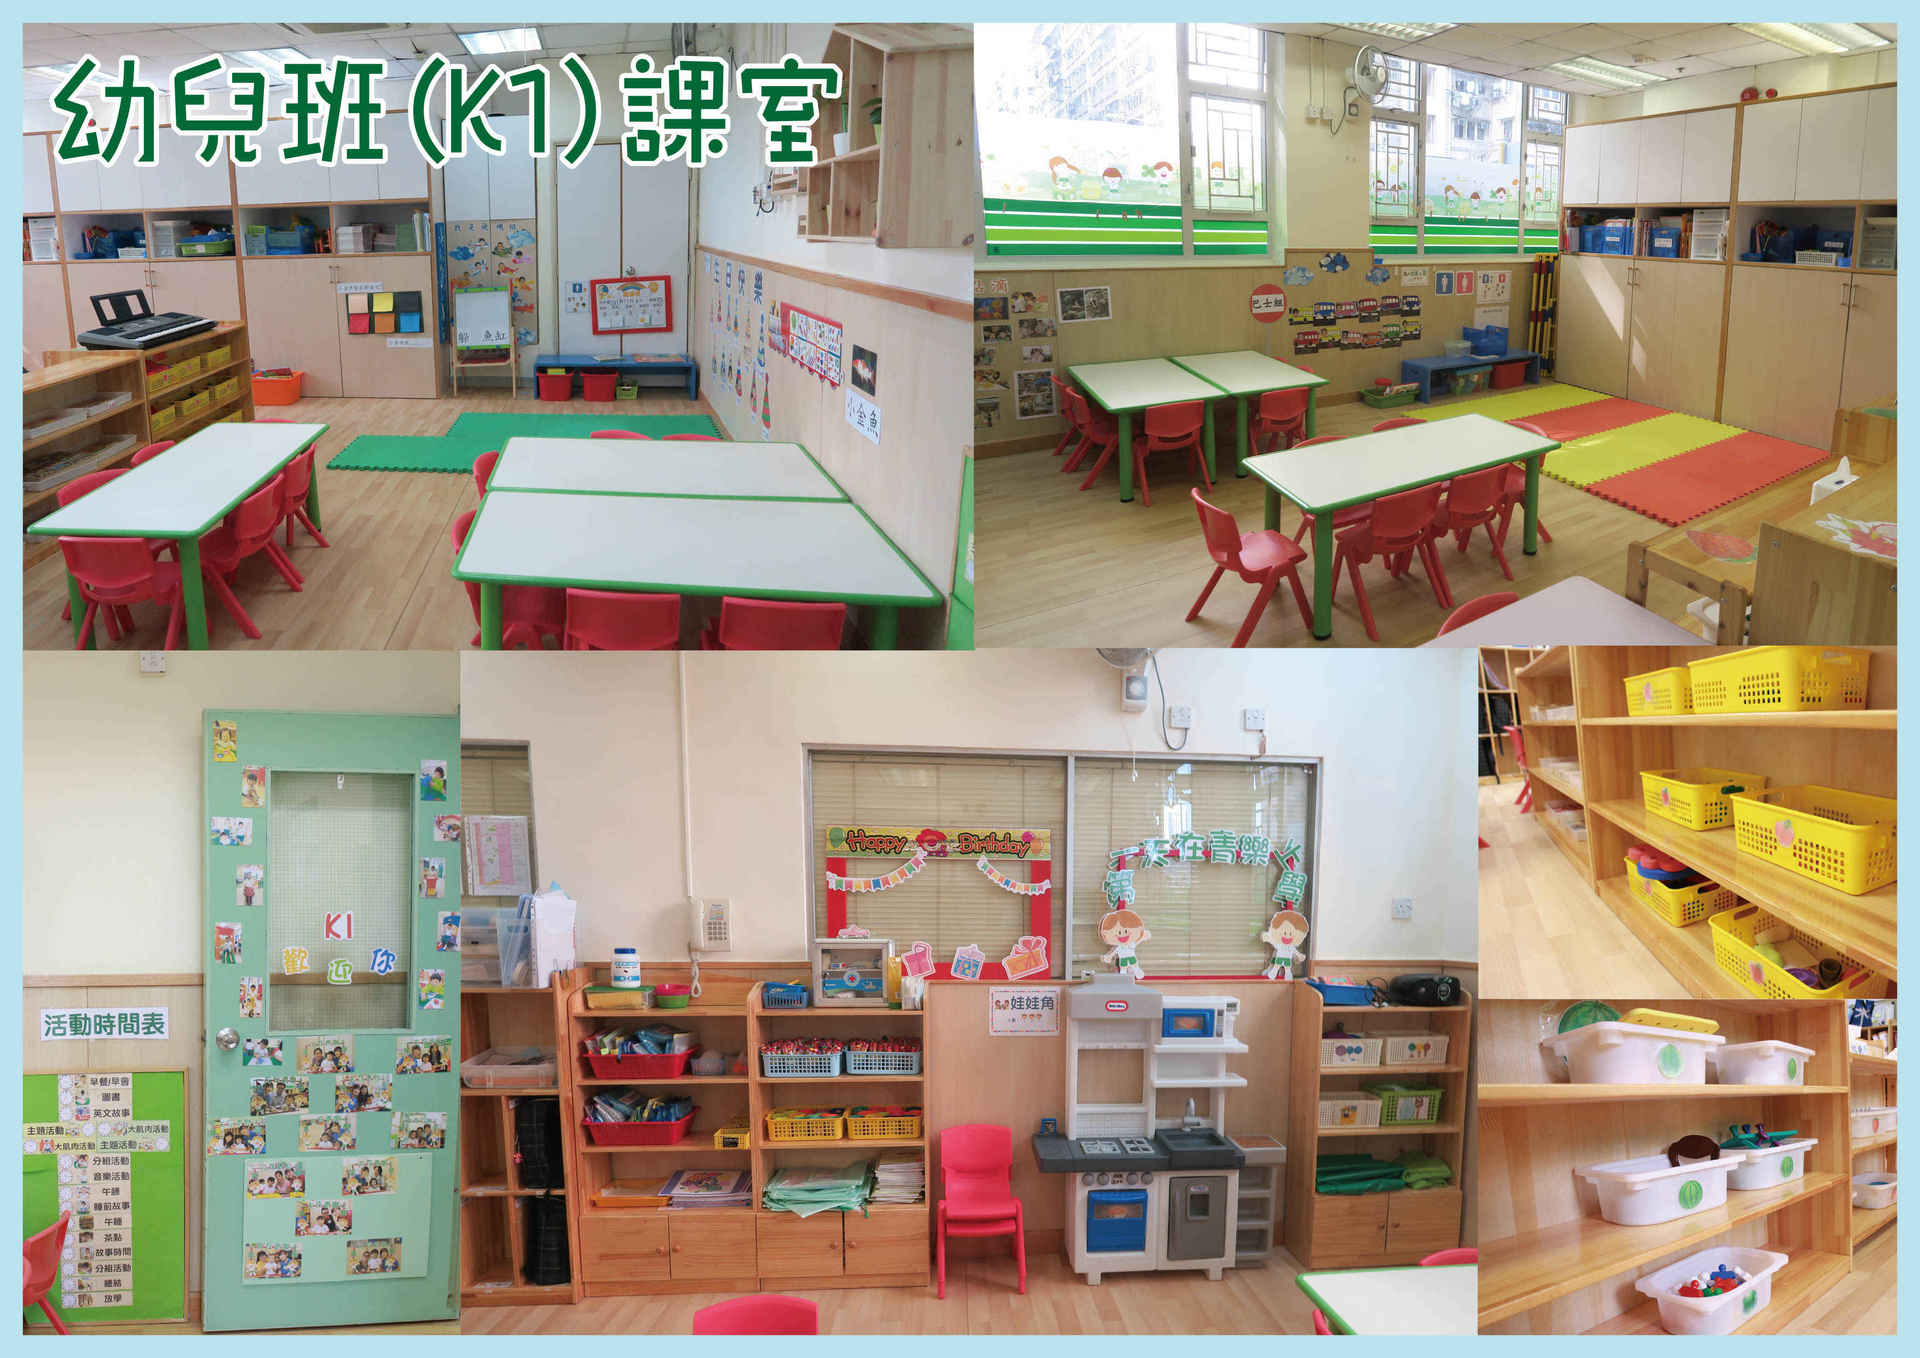 K1 Classroom